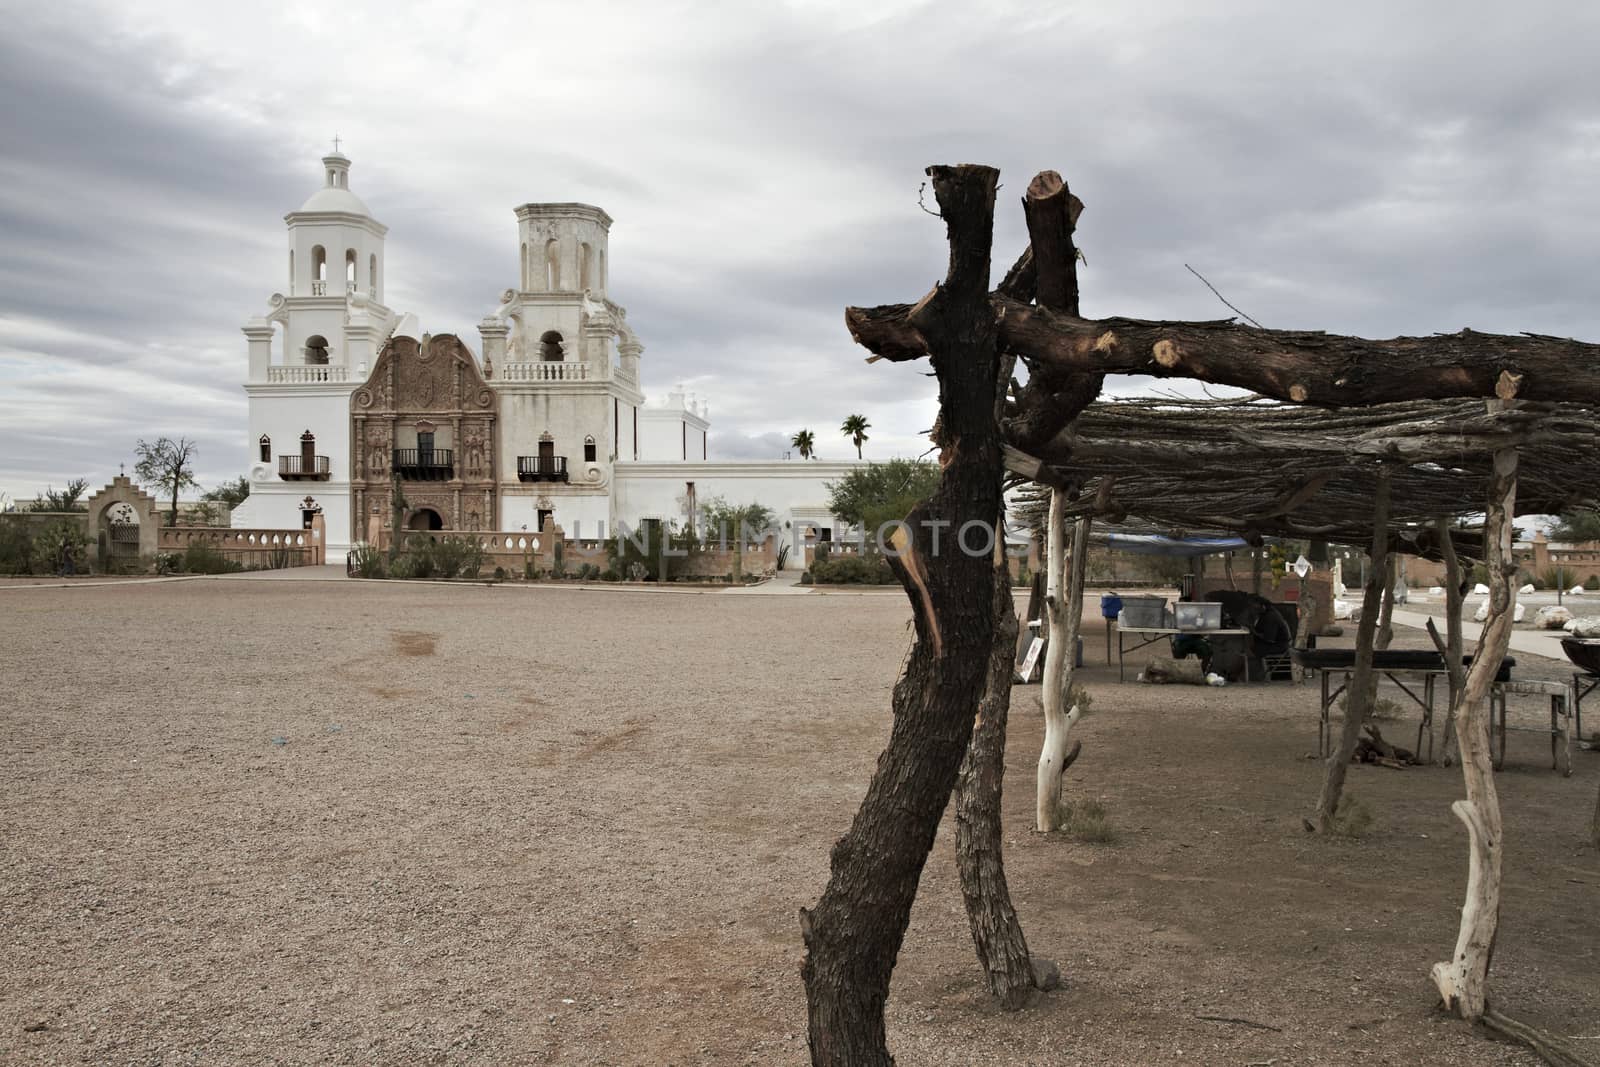 San Xavier del Bac Mission near Tucson, Arizona by Tjeerdkruse